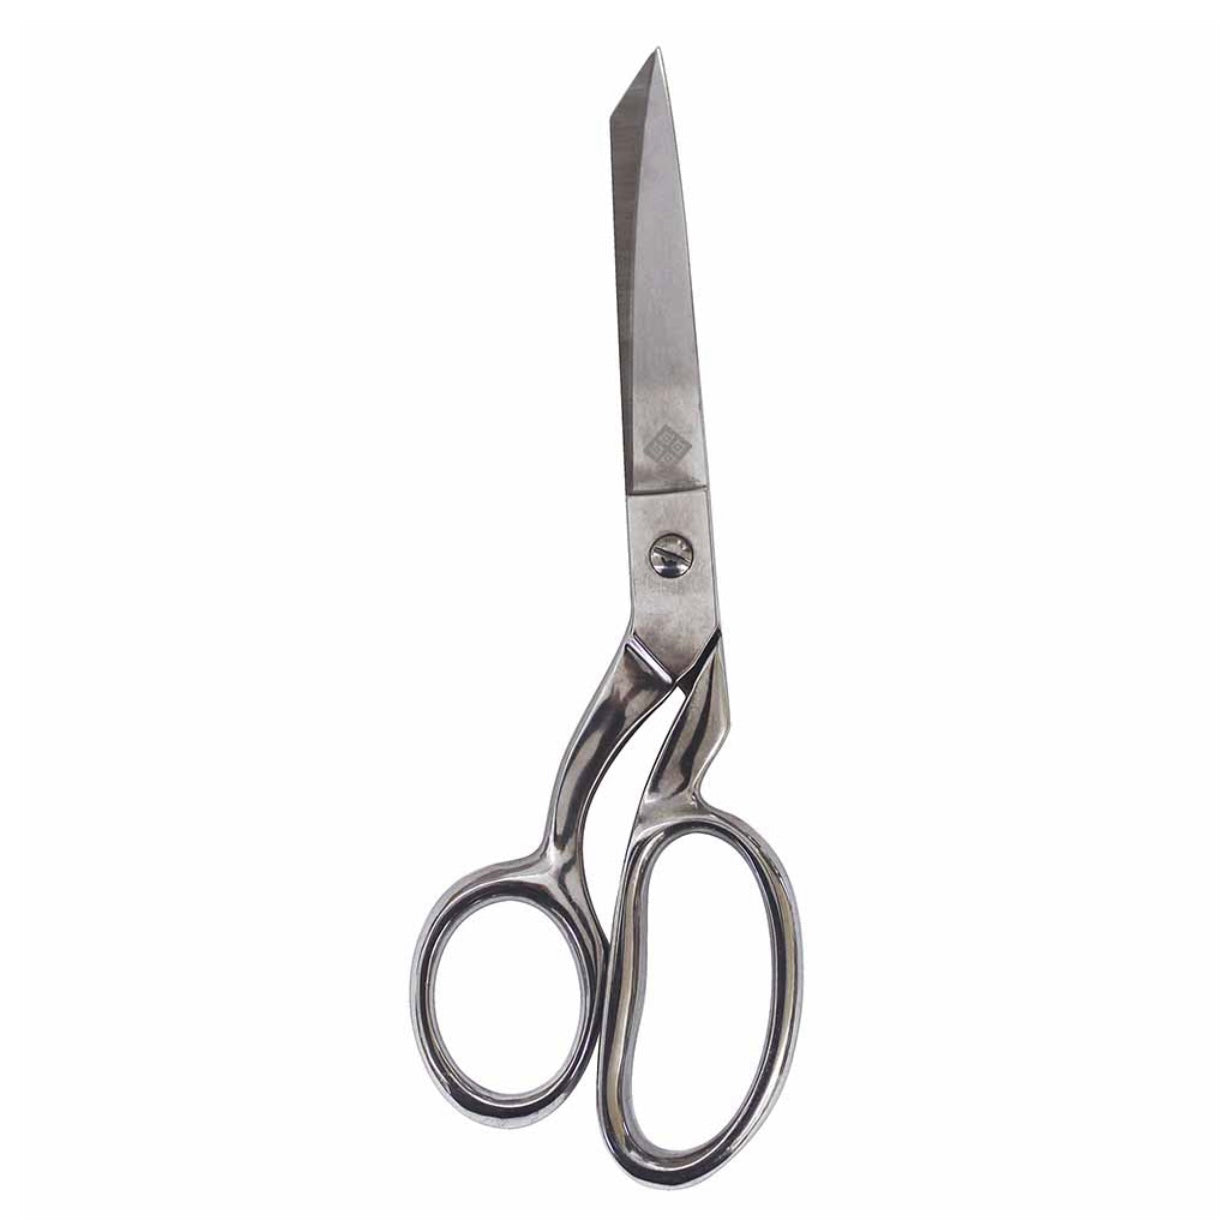 All Purpose Bent Forged Steel Scissors - Left Handed - Infiniti- 8 1/2”